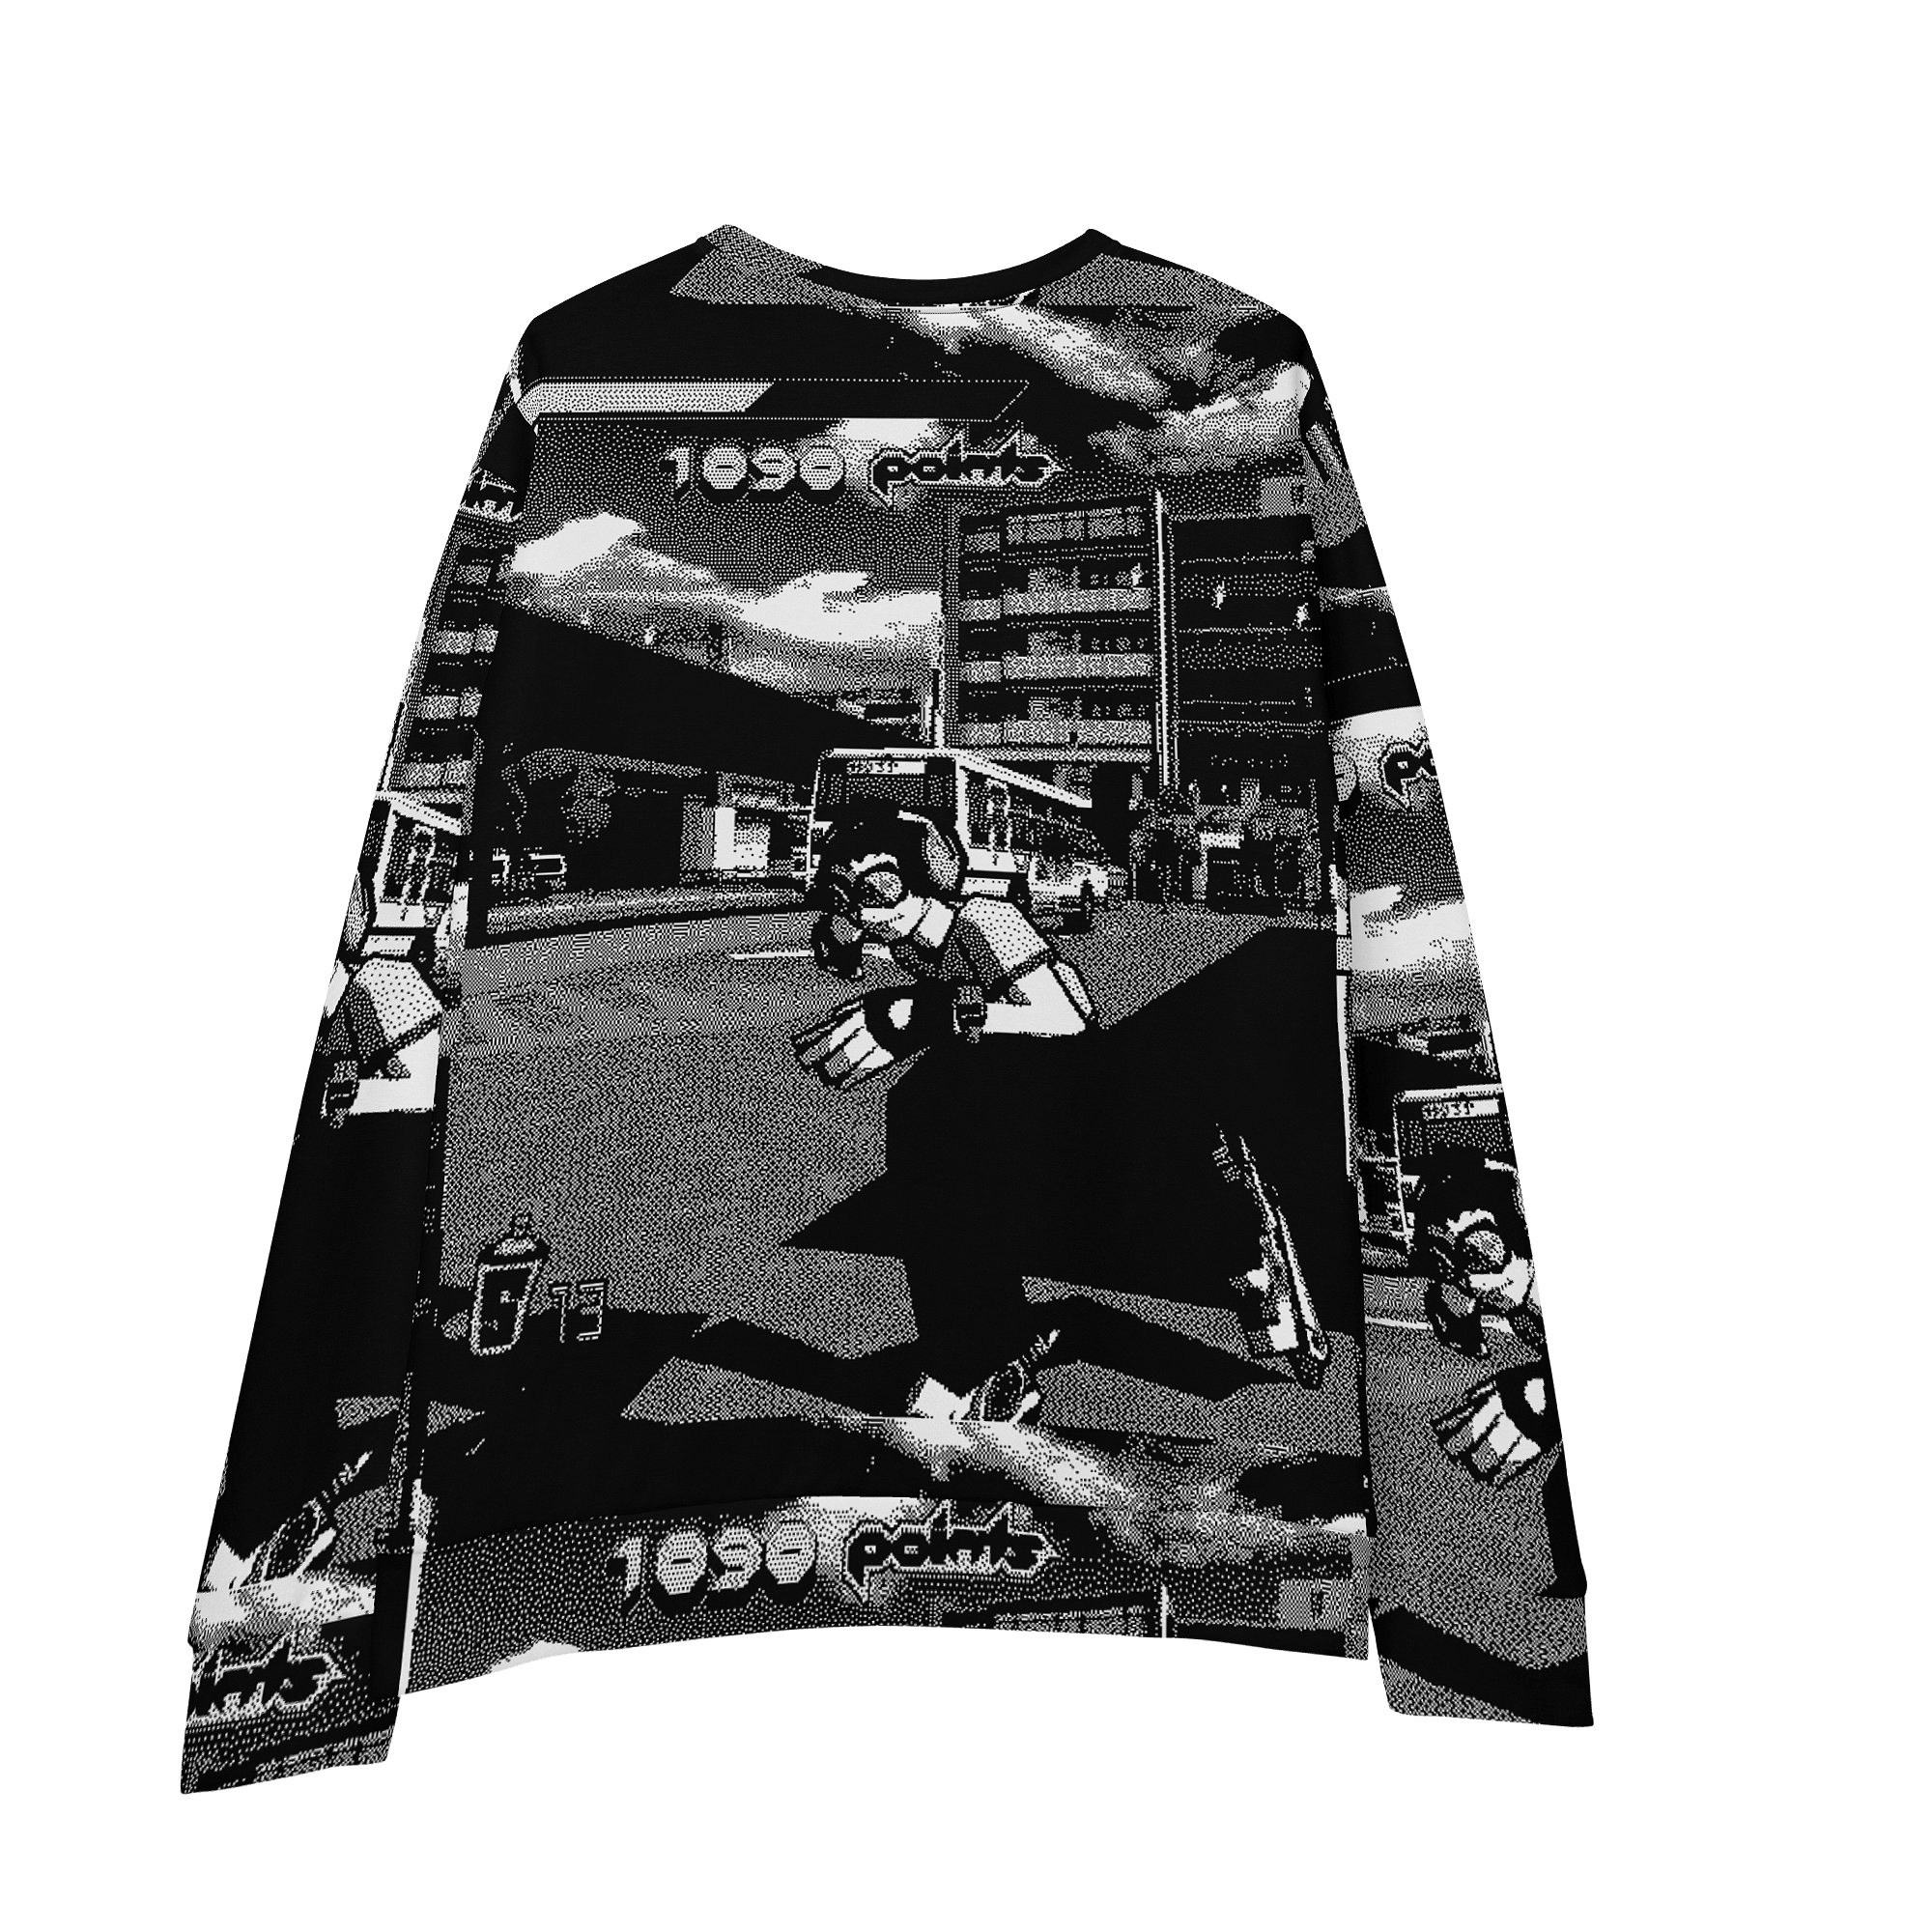 JET JET® Unisex Sweatshirt (7 pieces for sale) - Kikillo Club